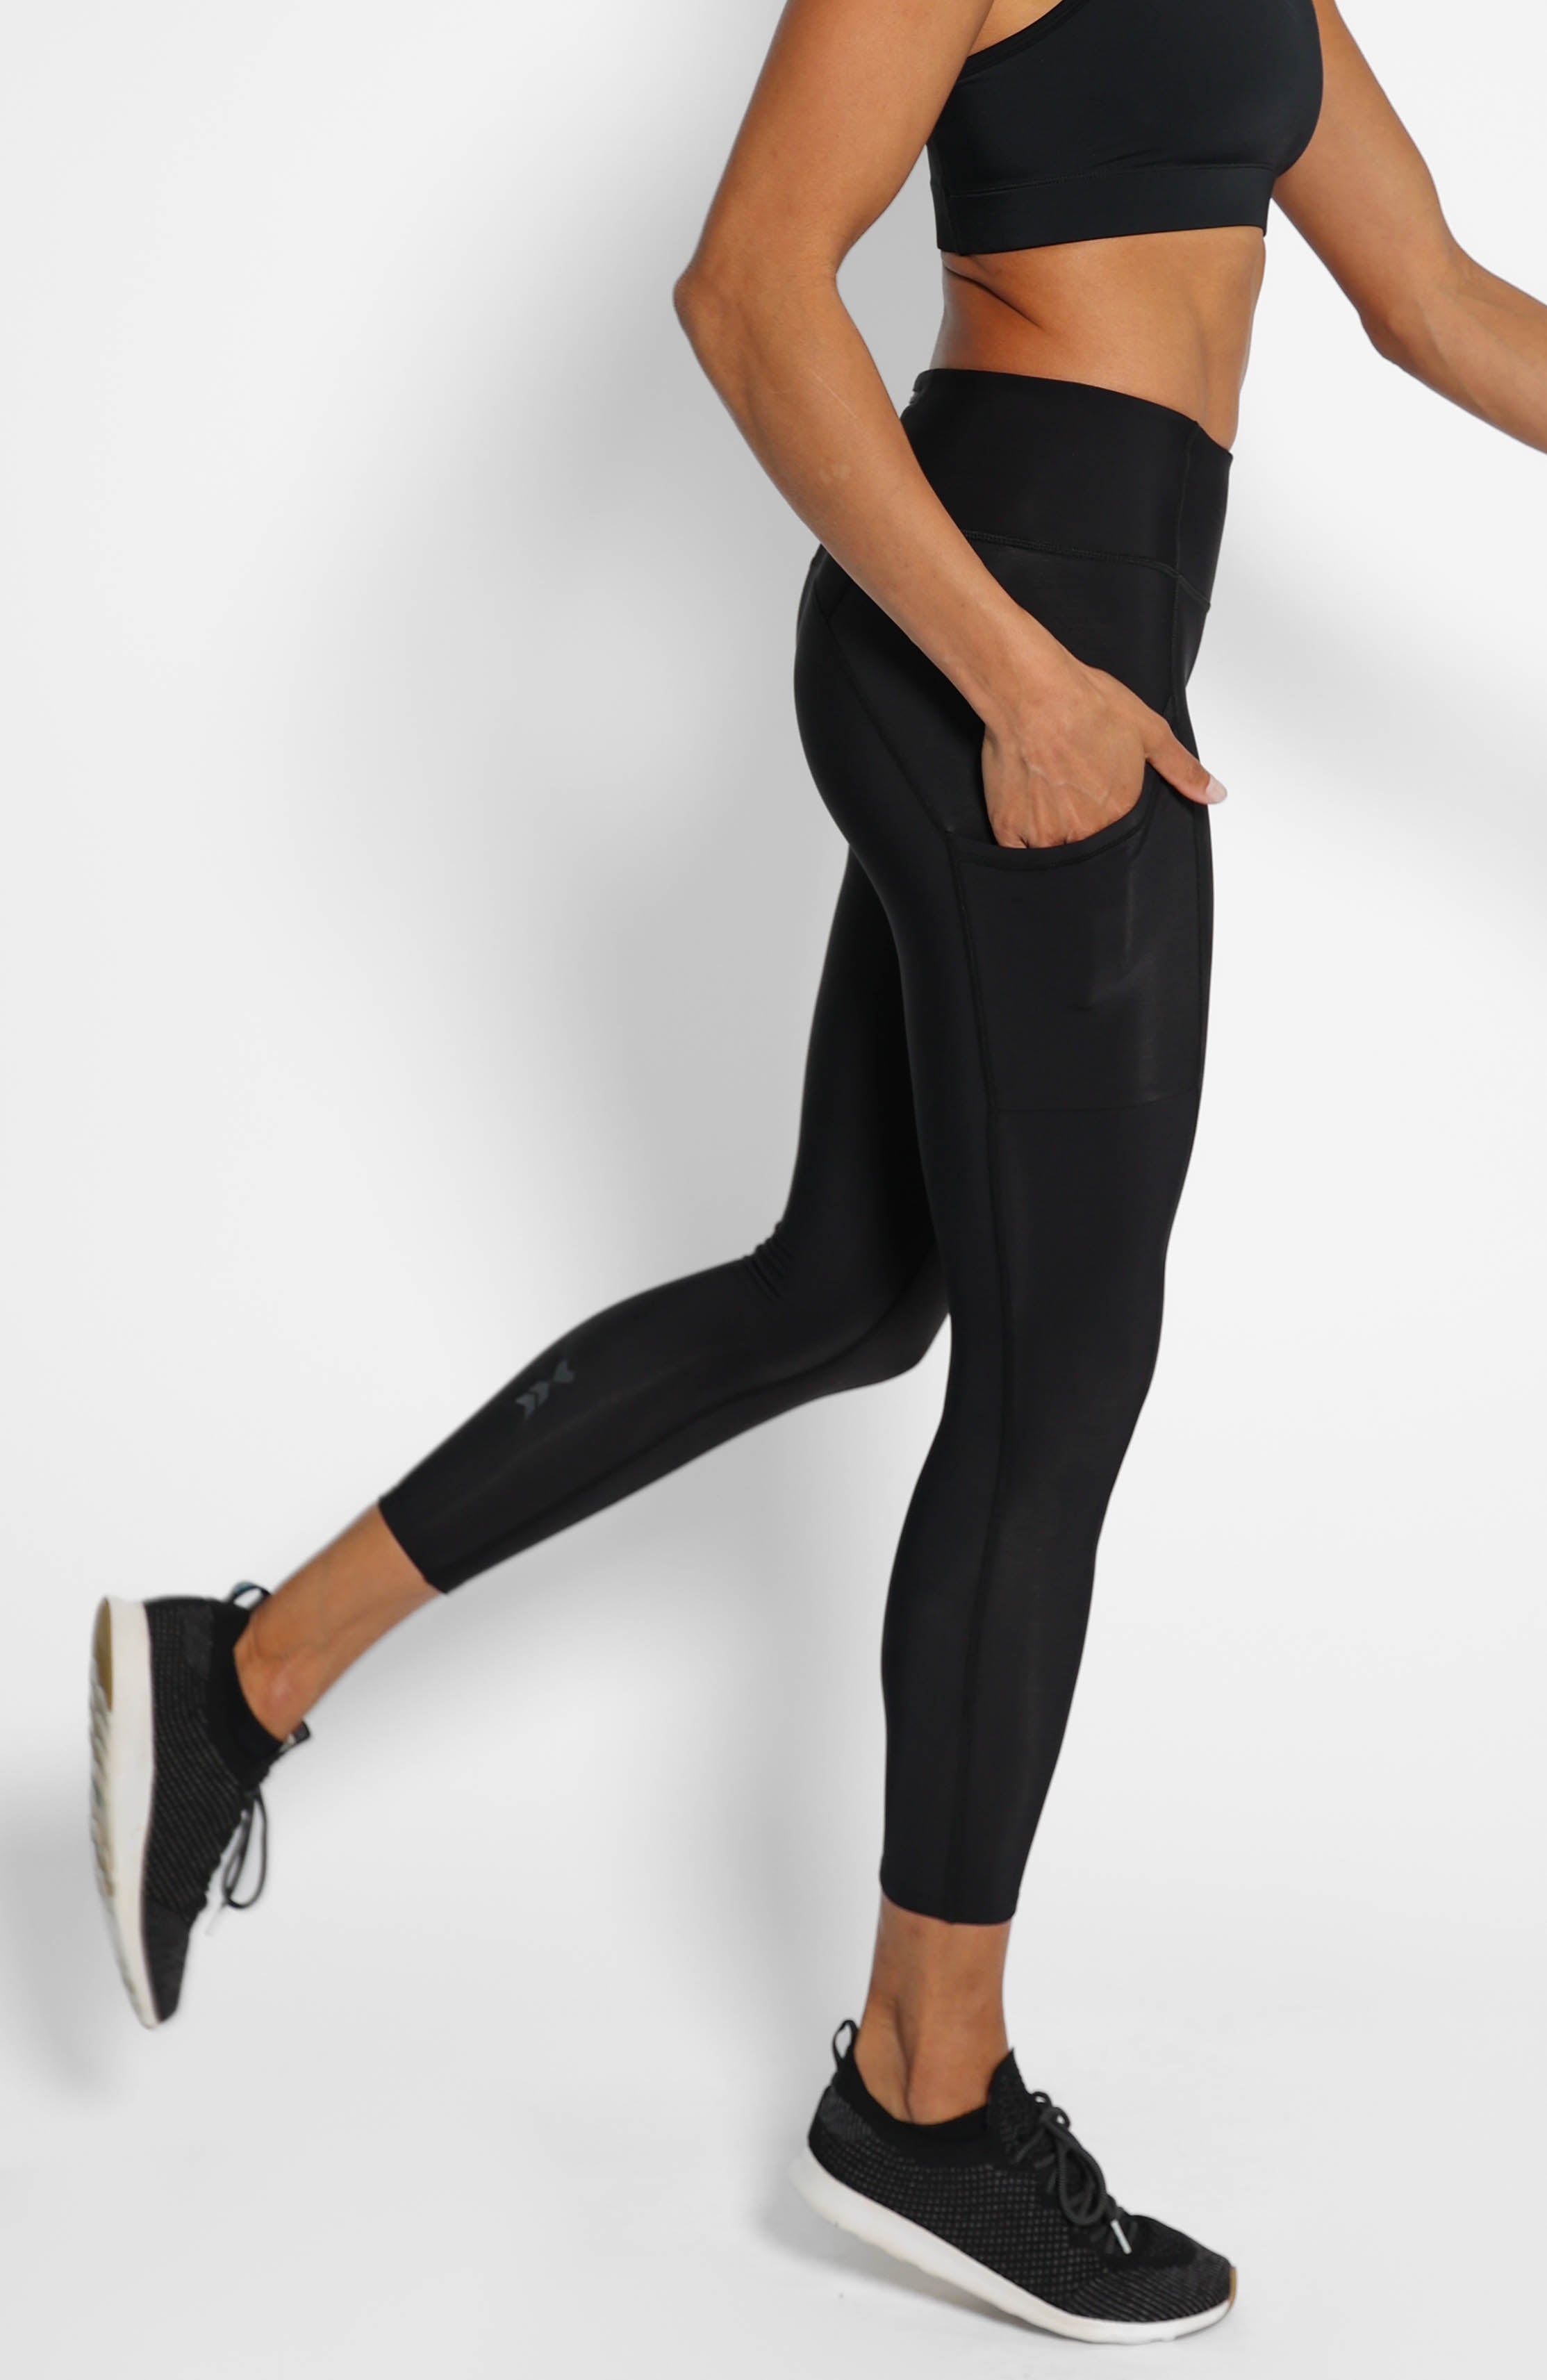 Women's Fitness Cardio Short Leggings with Phone Pocket - Black DOMYOS